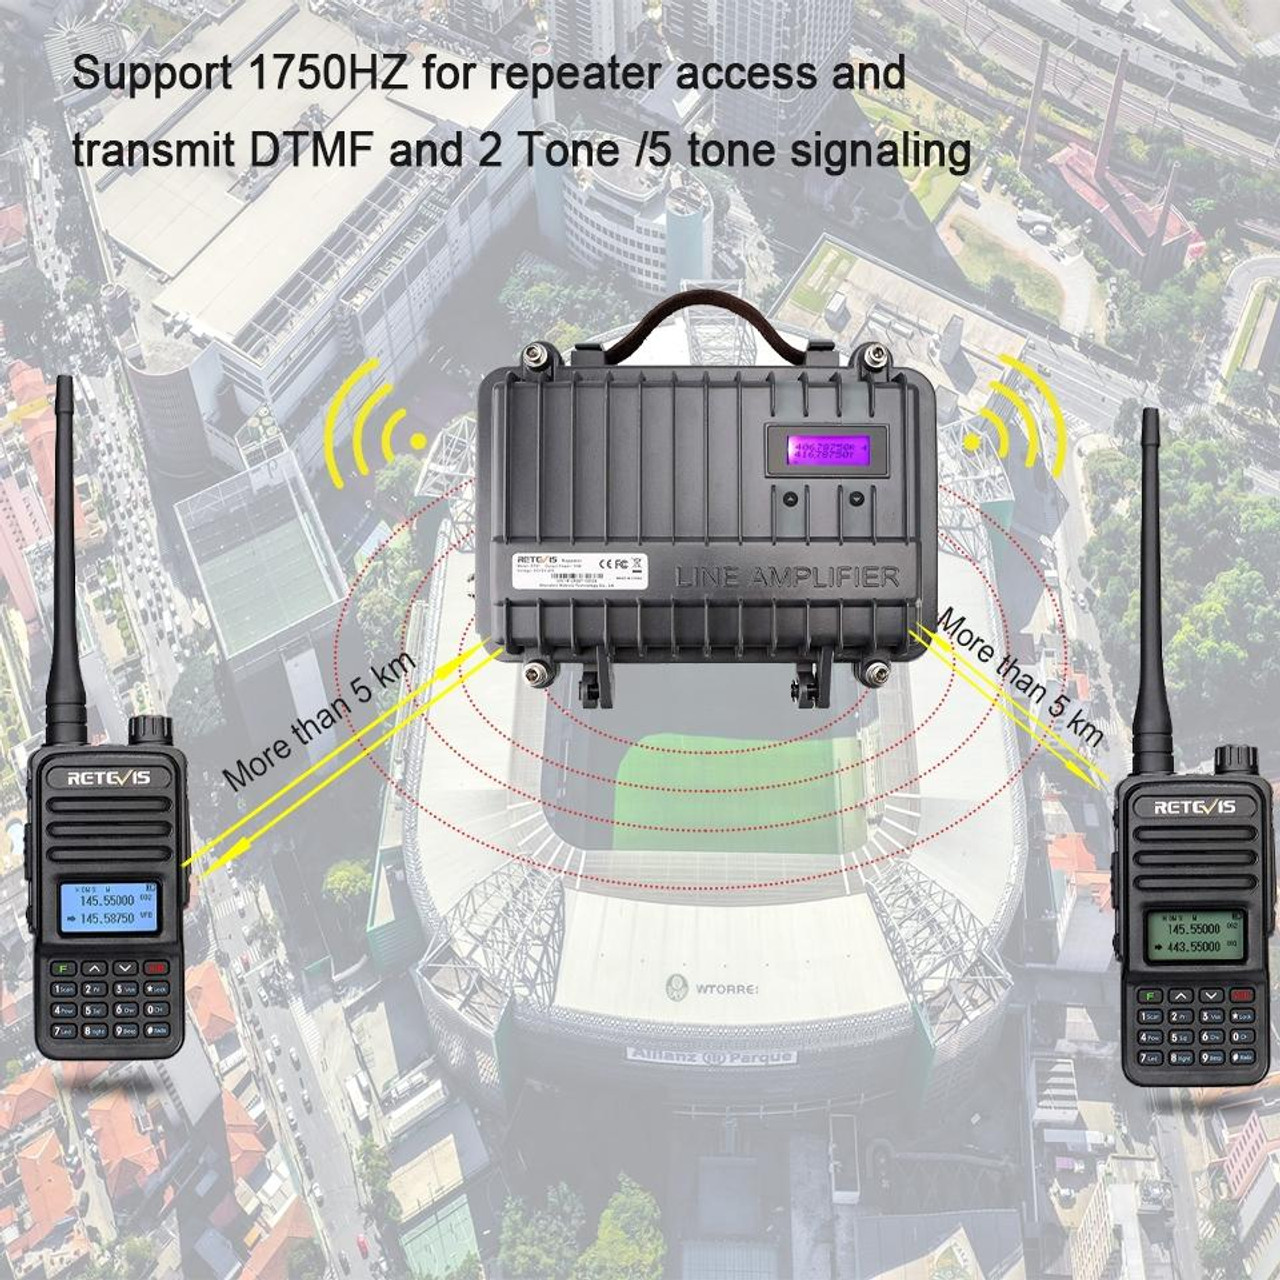 RETEVIS RT85 US Frequency 136.000-174.000MHz+400.000-470.000MHz 200CHS Dual  Band Digital Two Way Radio Handheld Walkie Talkie(Black), snatcher